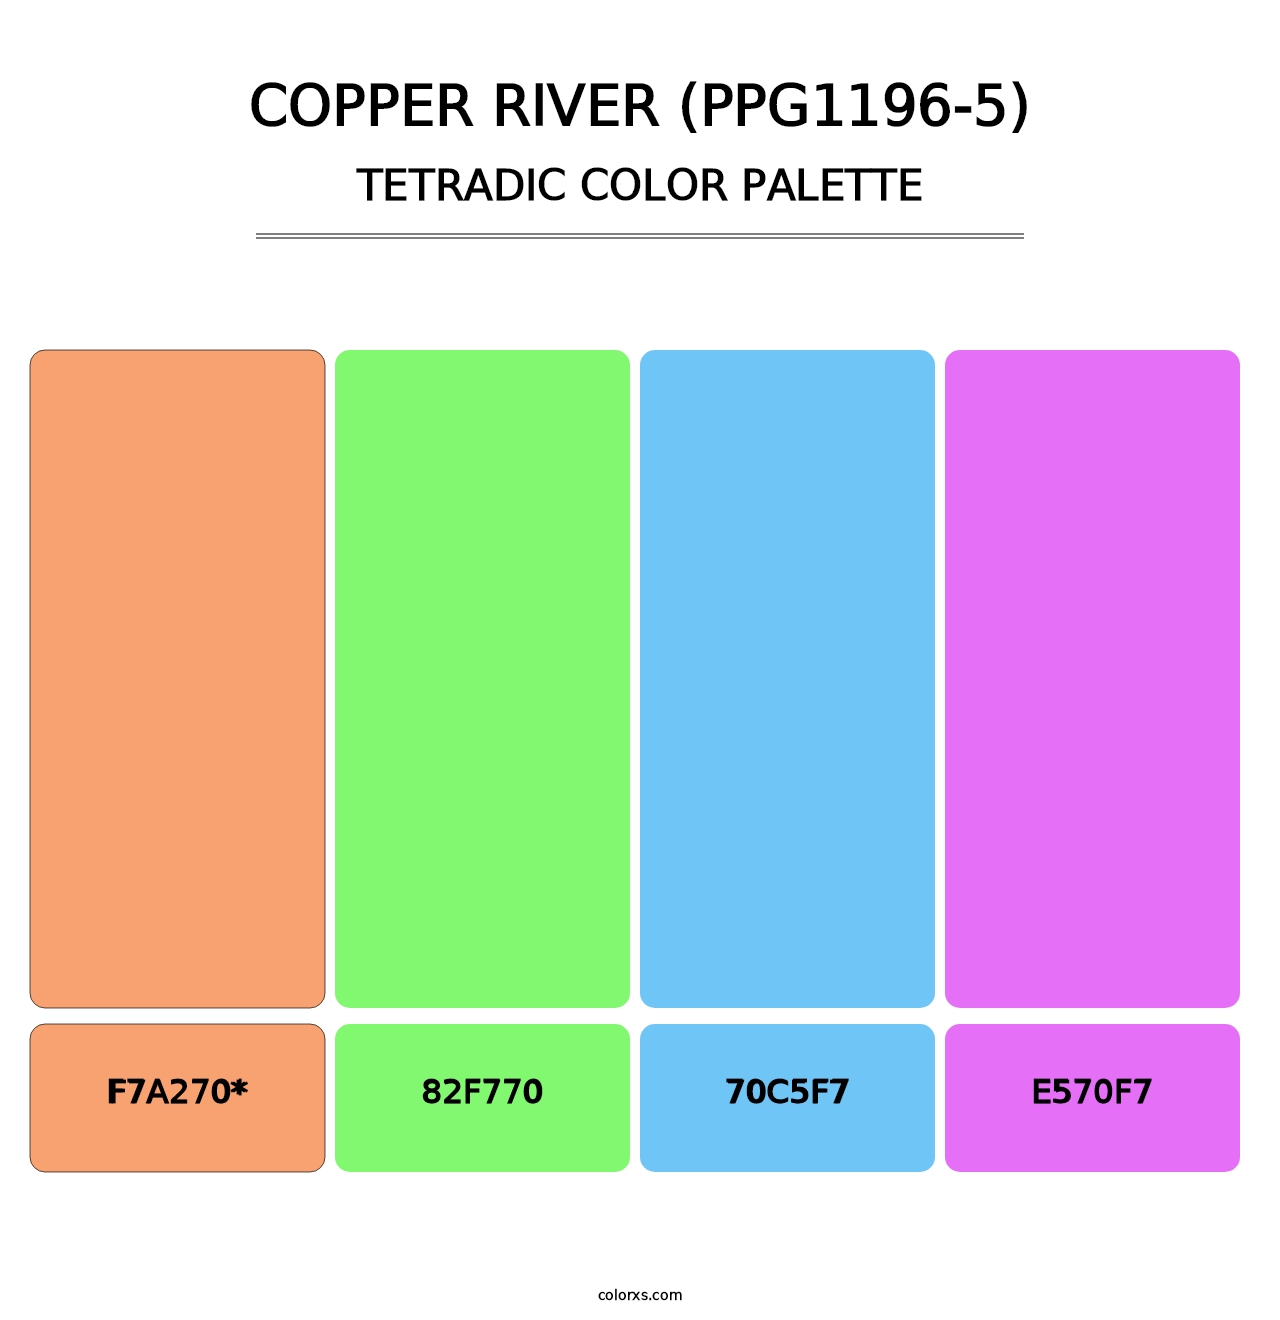 Copper River (PPG1196-5) - Tetradic Color Palette